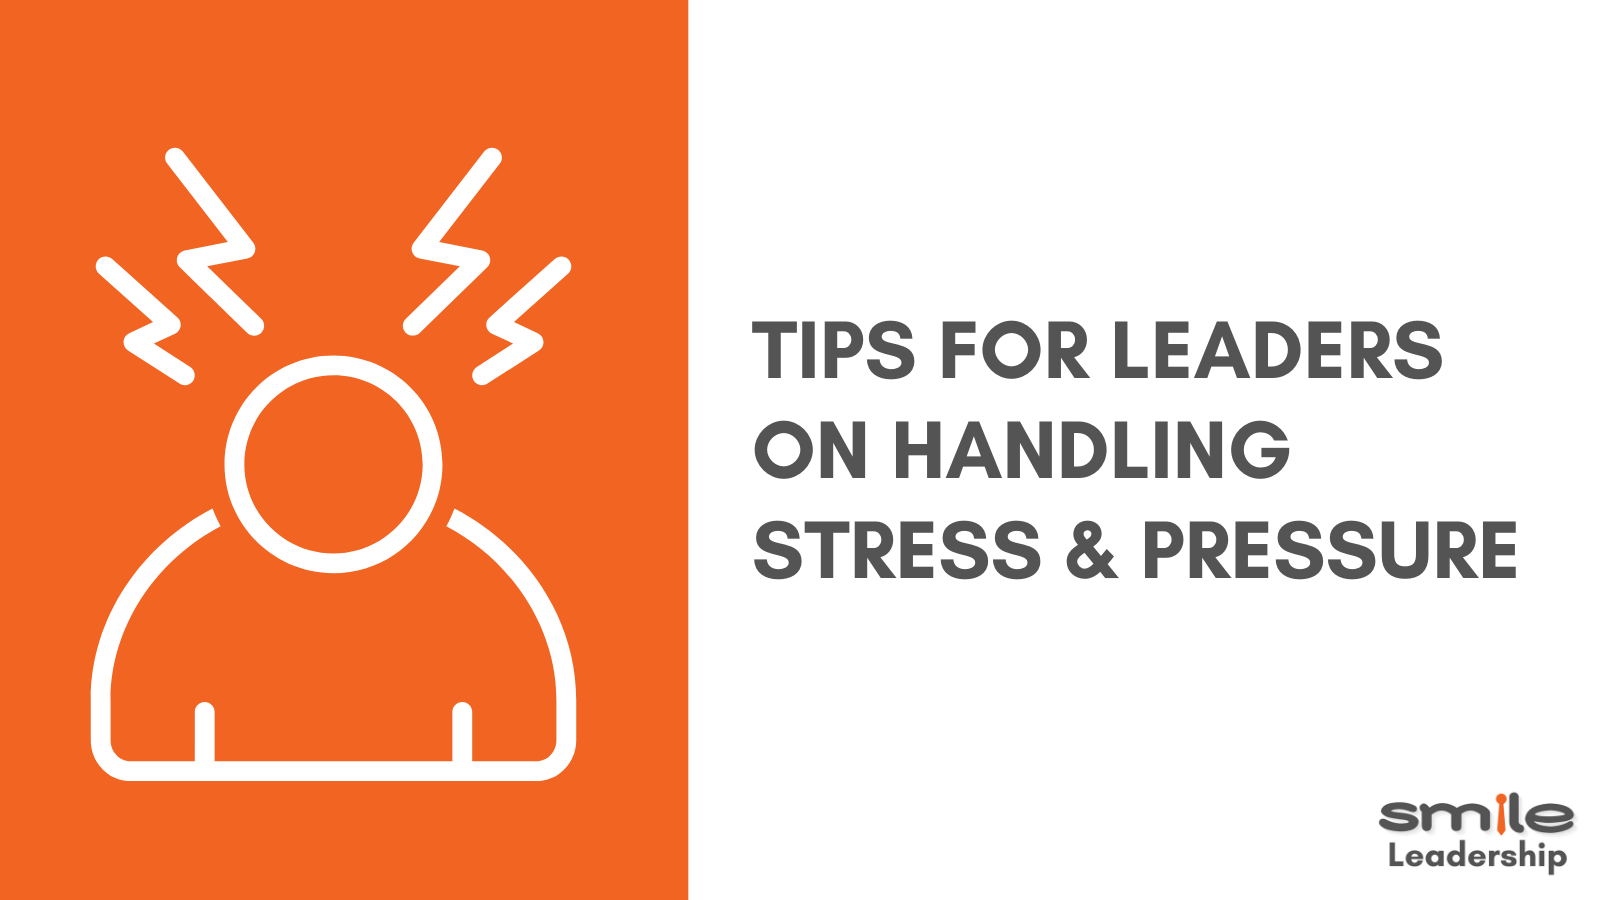  Tips for leaders on handling stress & pressure